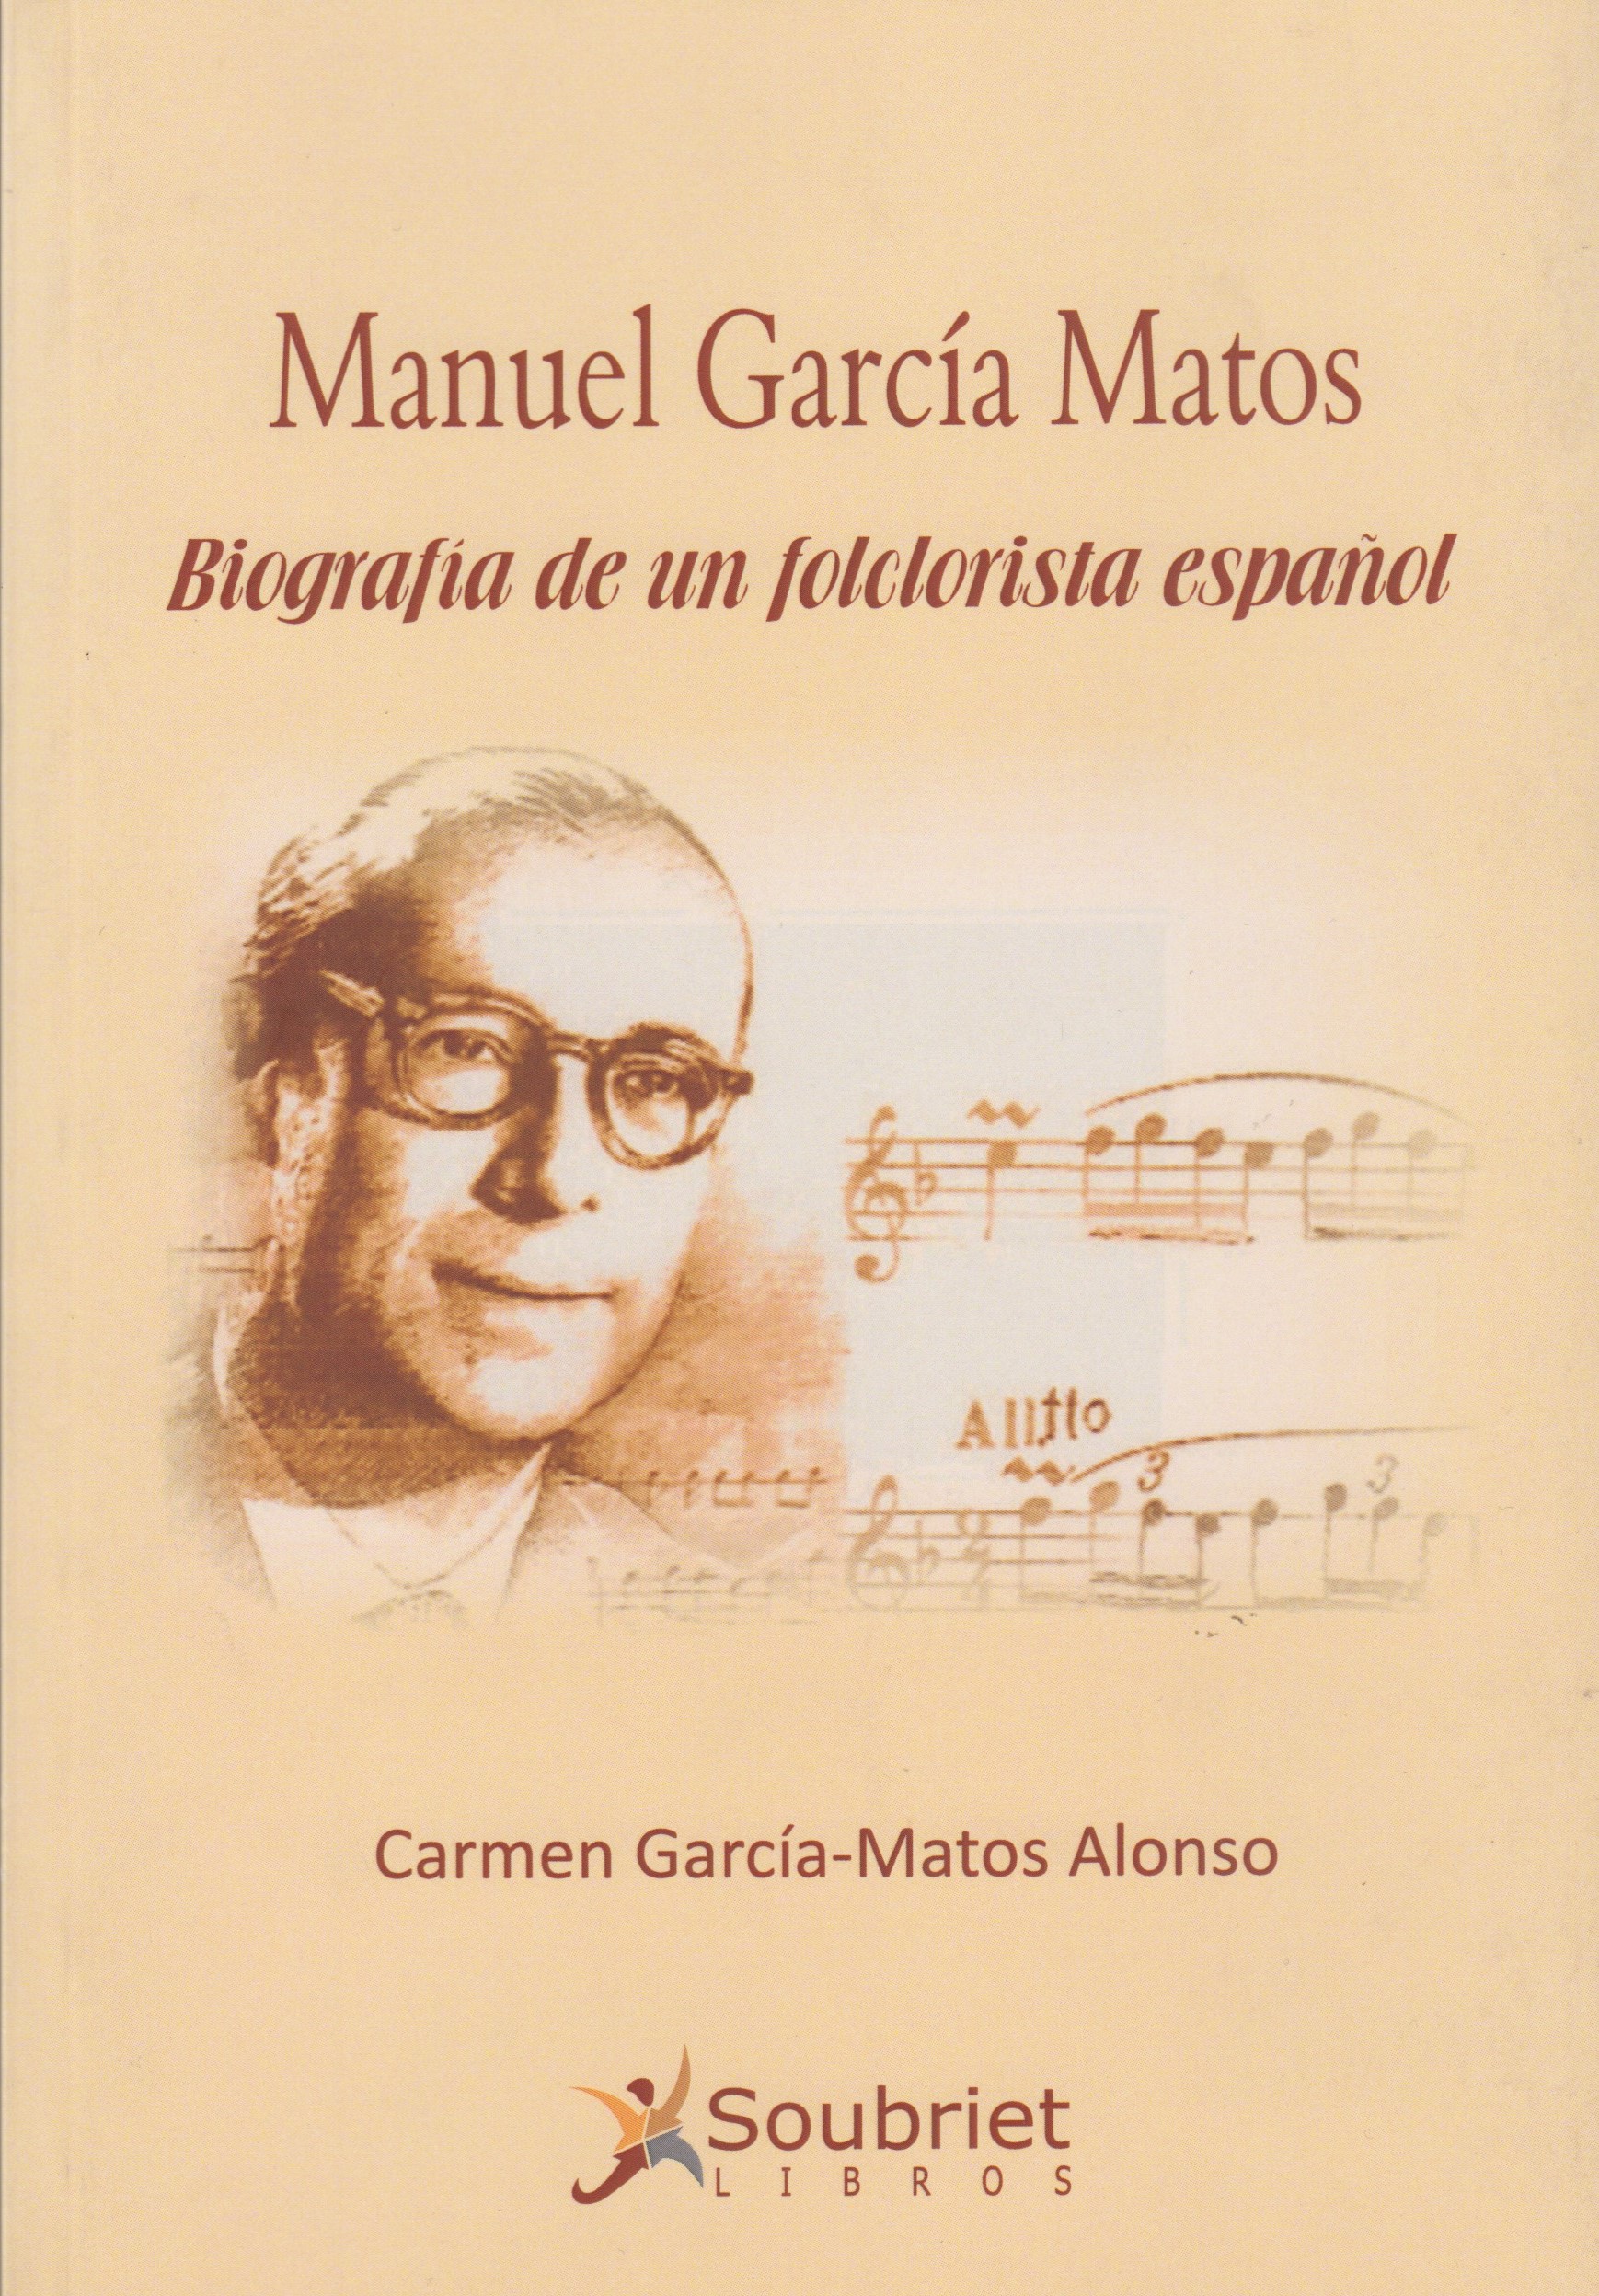 Manuel Garcia Matos. Biografia de un folclorista español